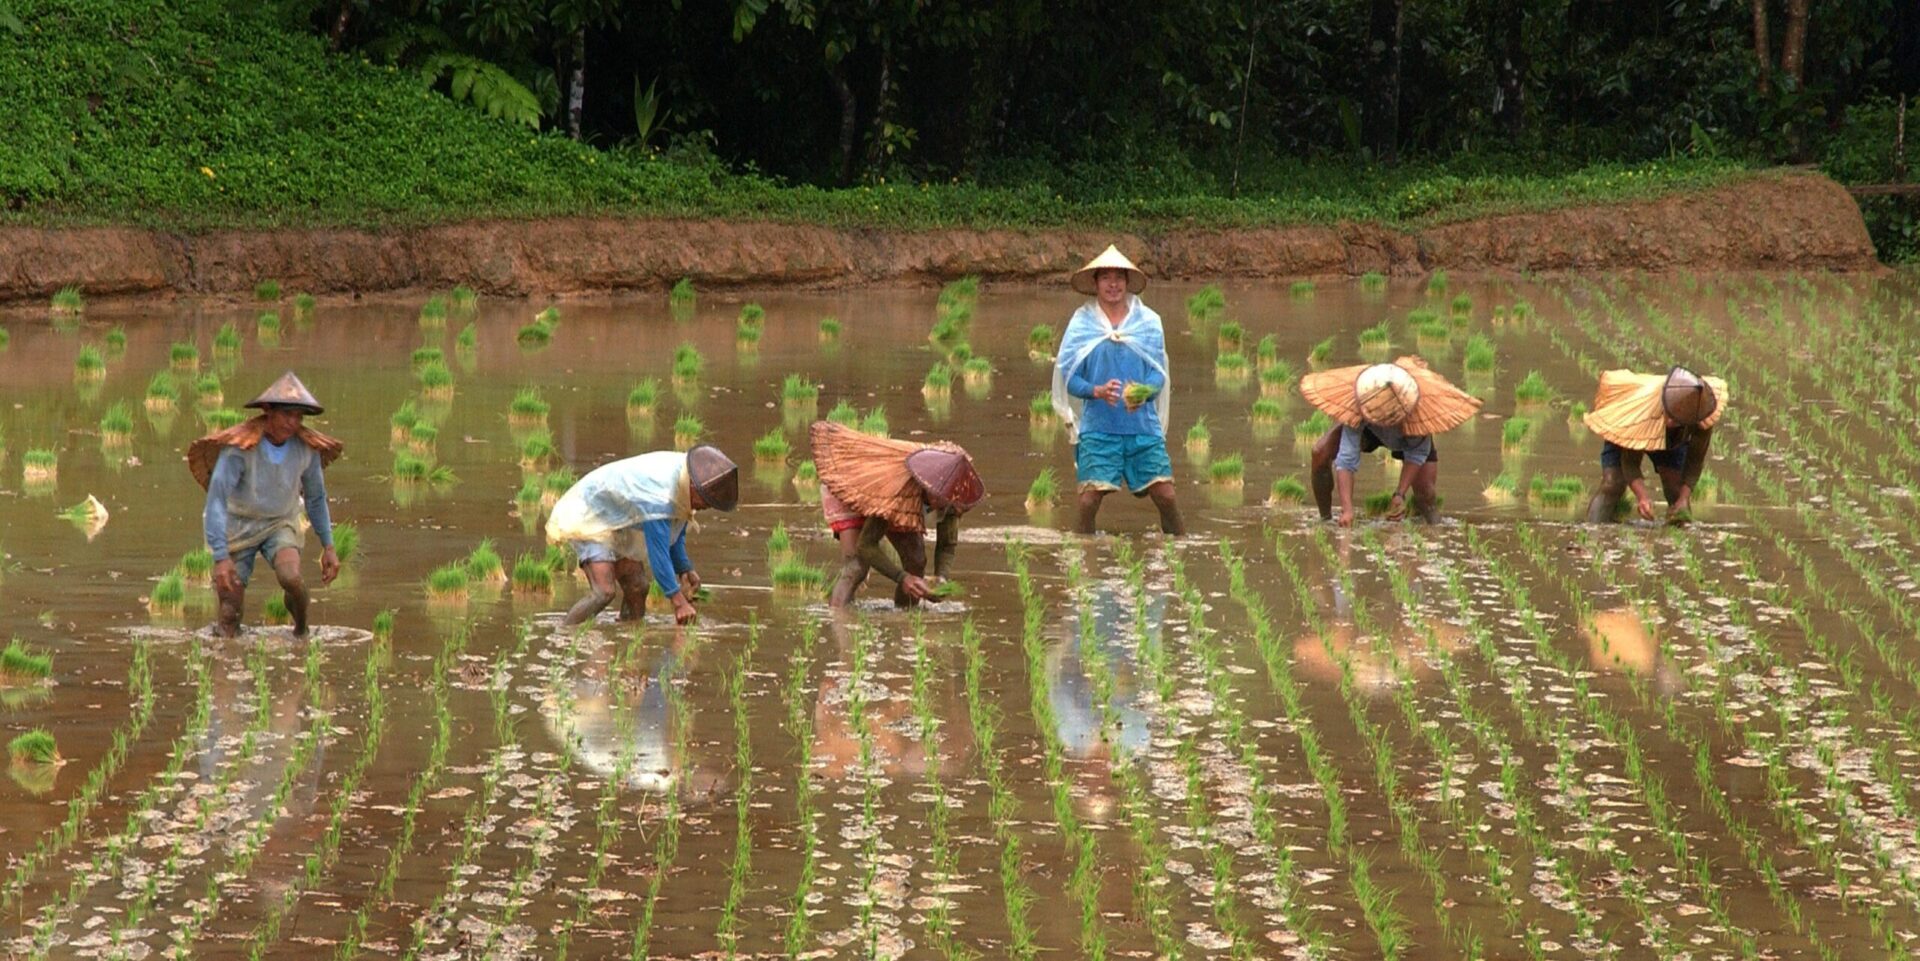 Six people harvesting rice standing in knee high water